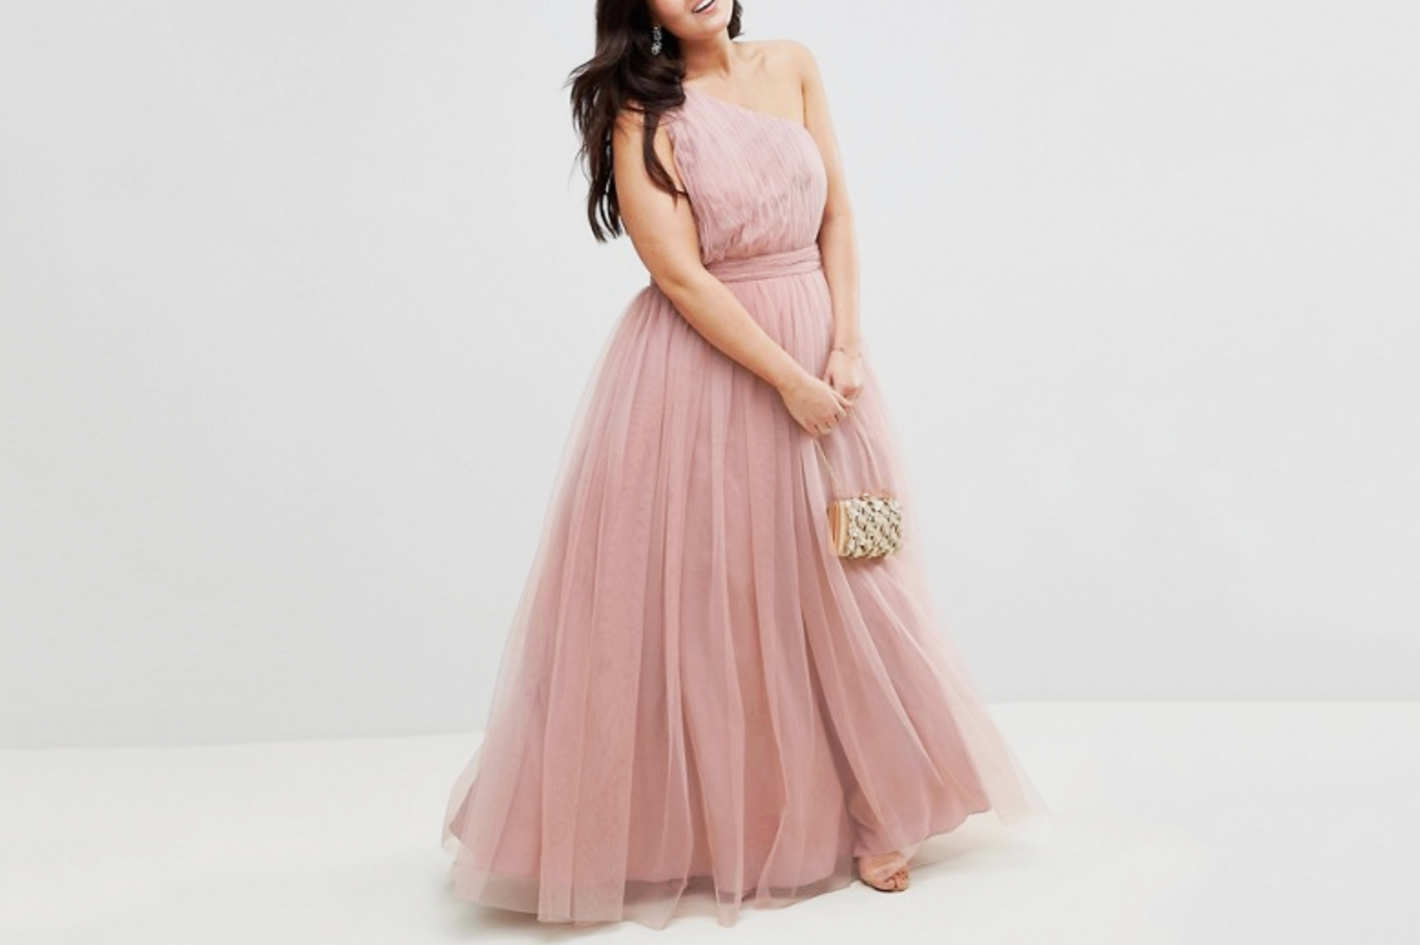 Pick Rainbow of Prom Dresses & I'll Guess Generation & … Quiz pink prom dress